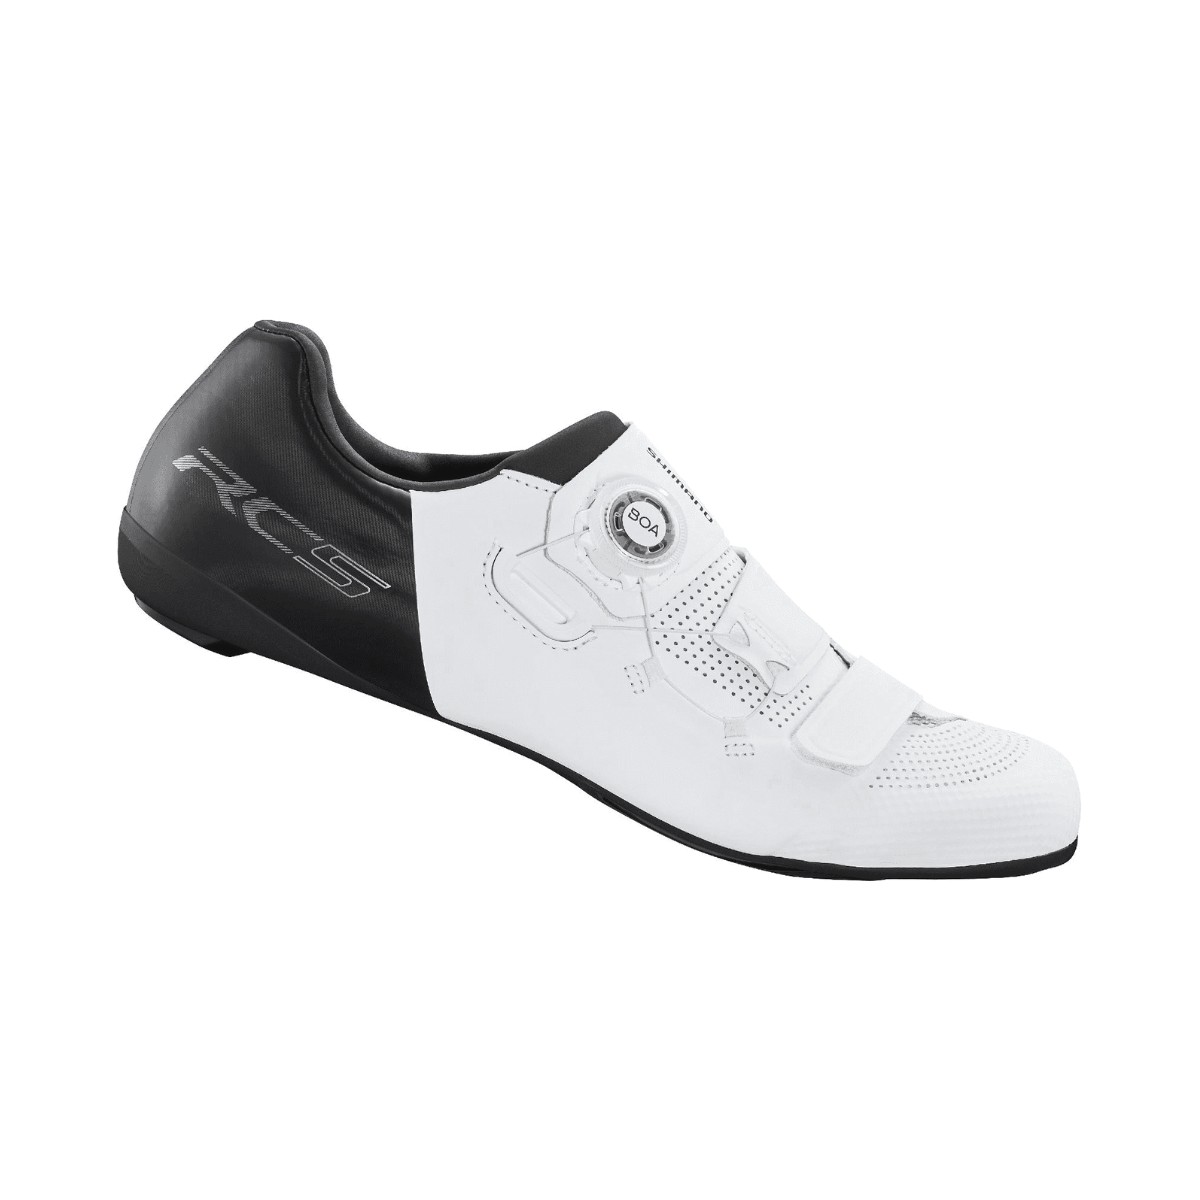 Shimano RC502 Road Shoes White, Size 39 - EUR